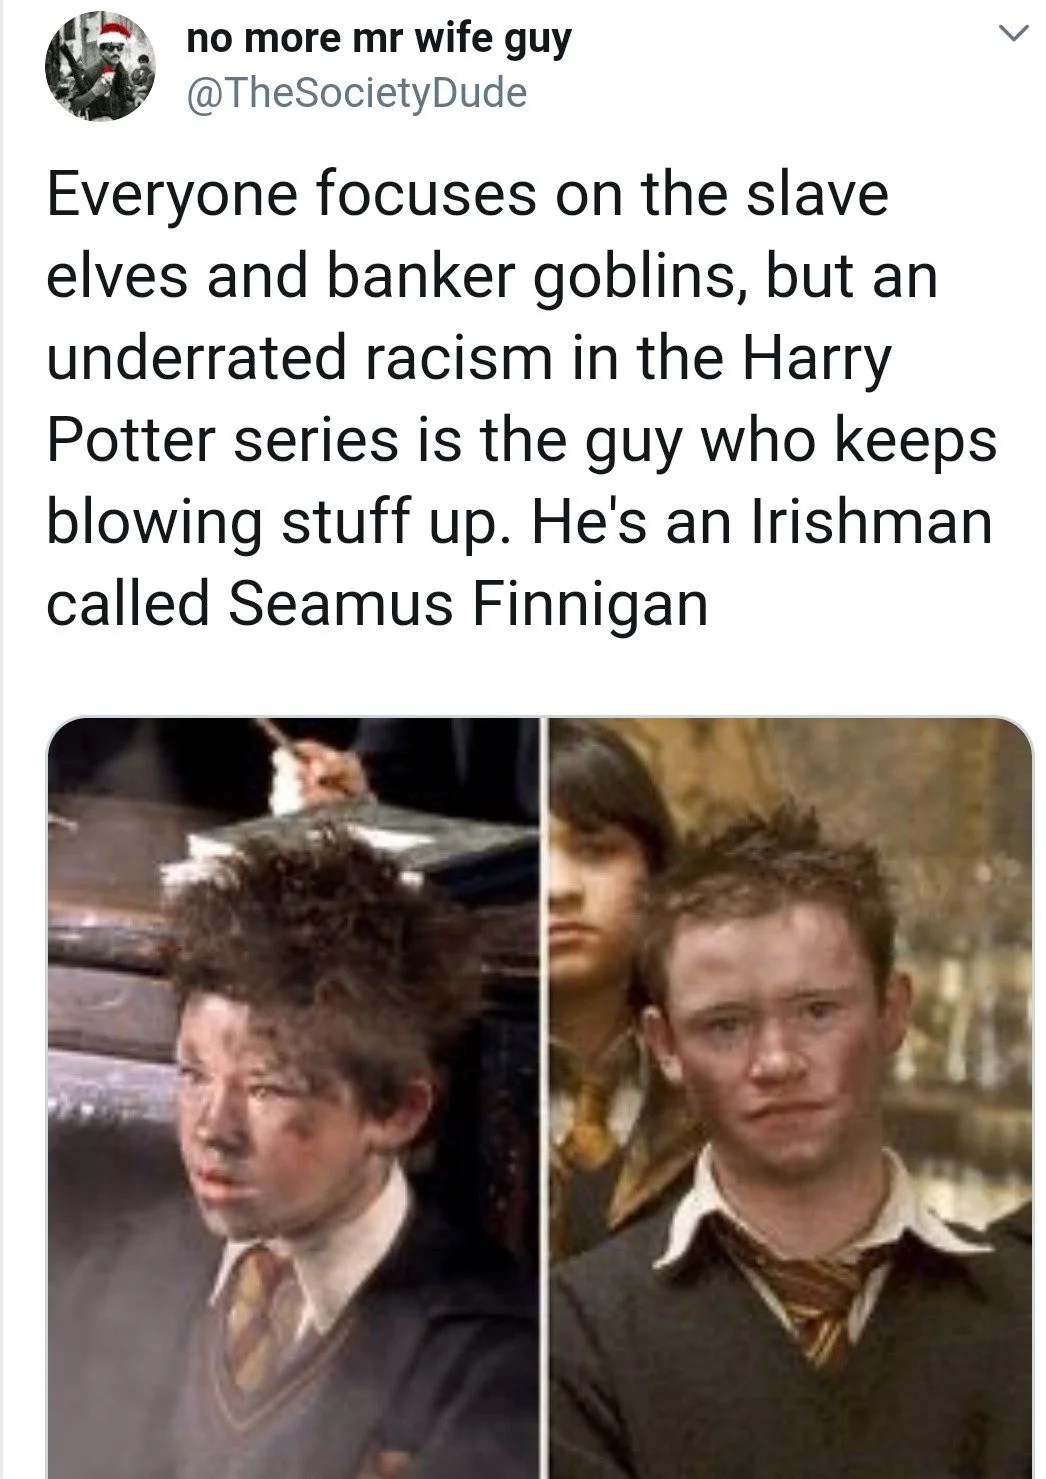 Harry Potter stereotypes